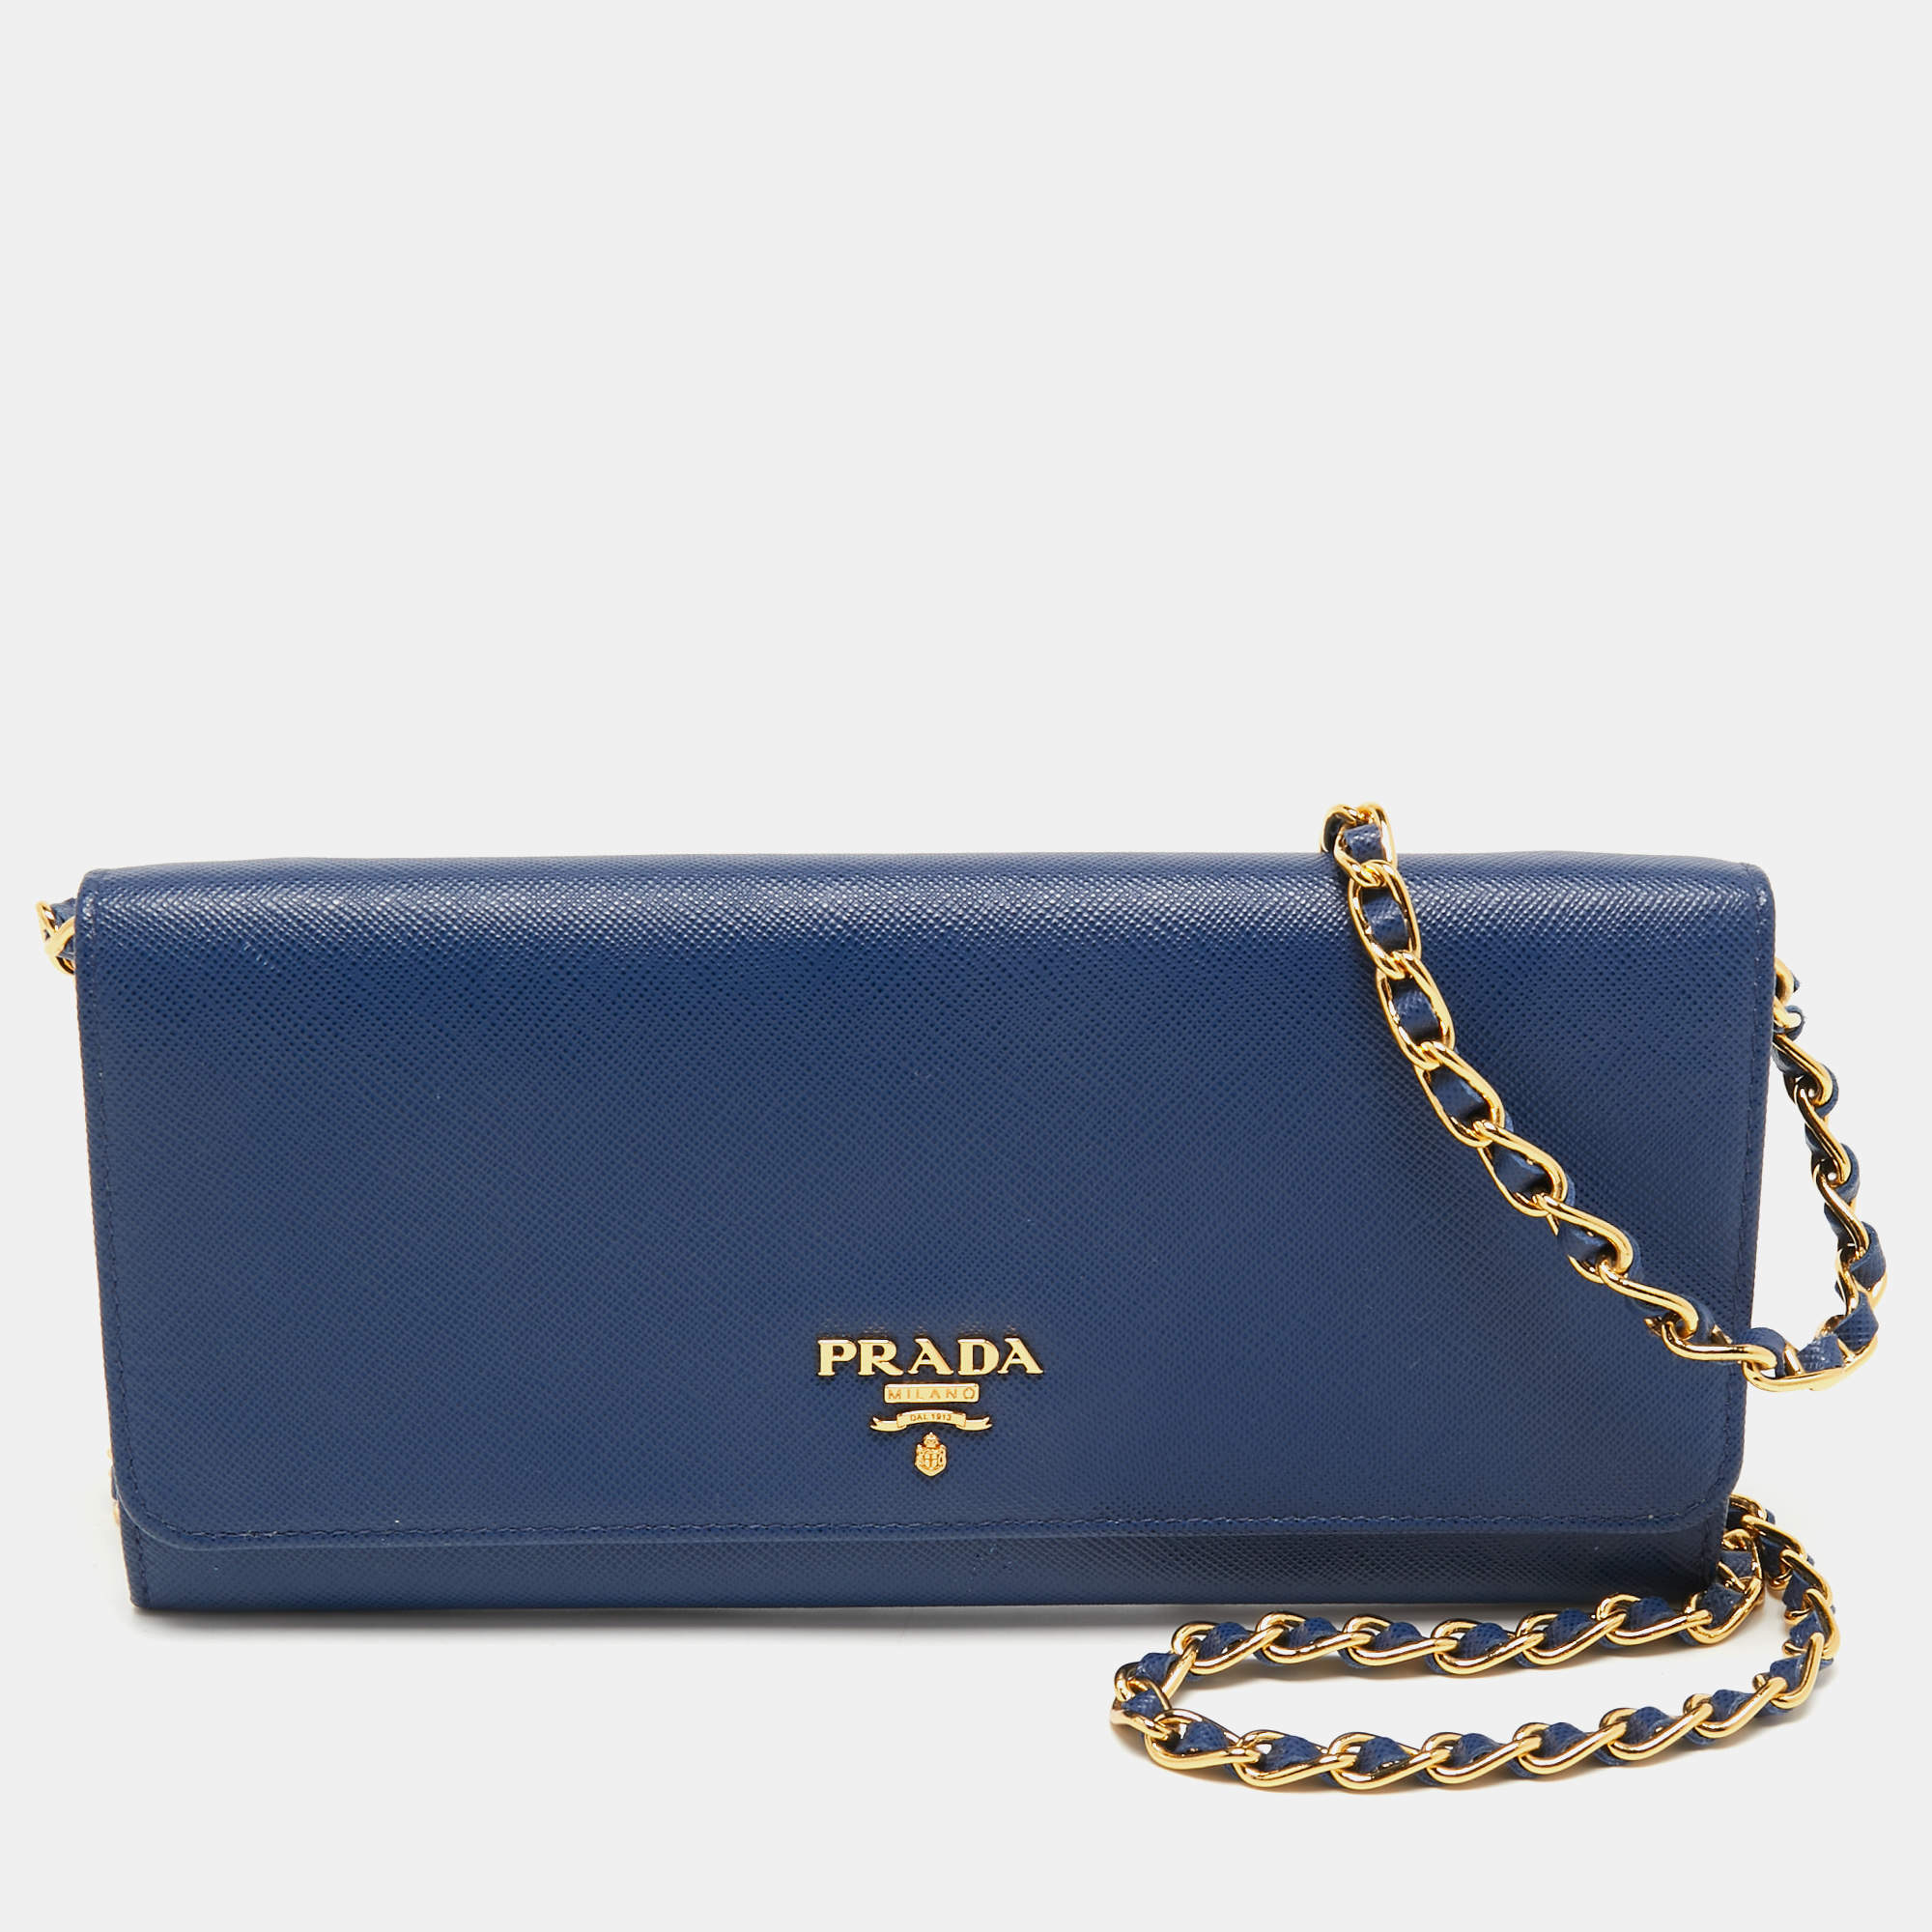 Prada Gold Textured Leather Flap Chain Clutch Prada | The Luxury Closet